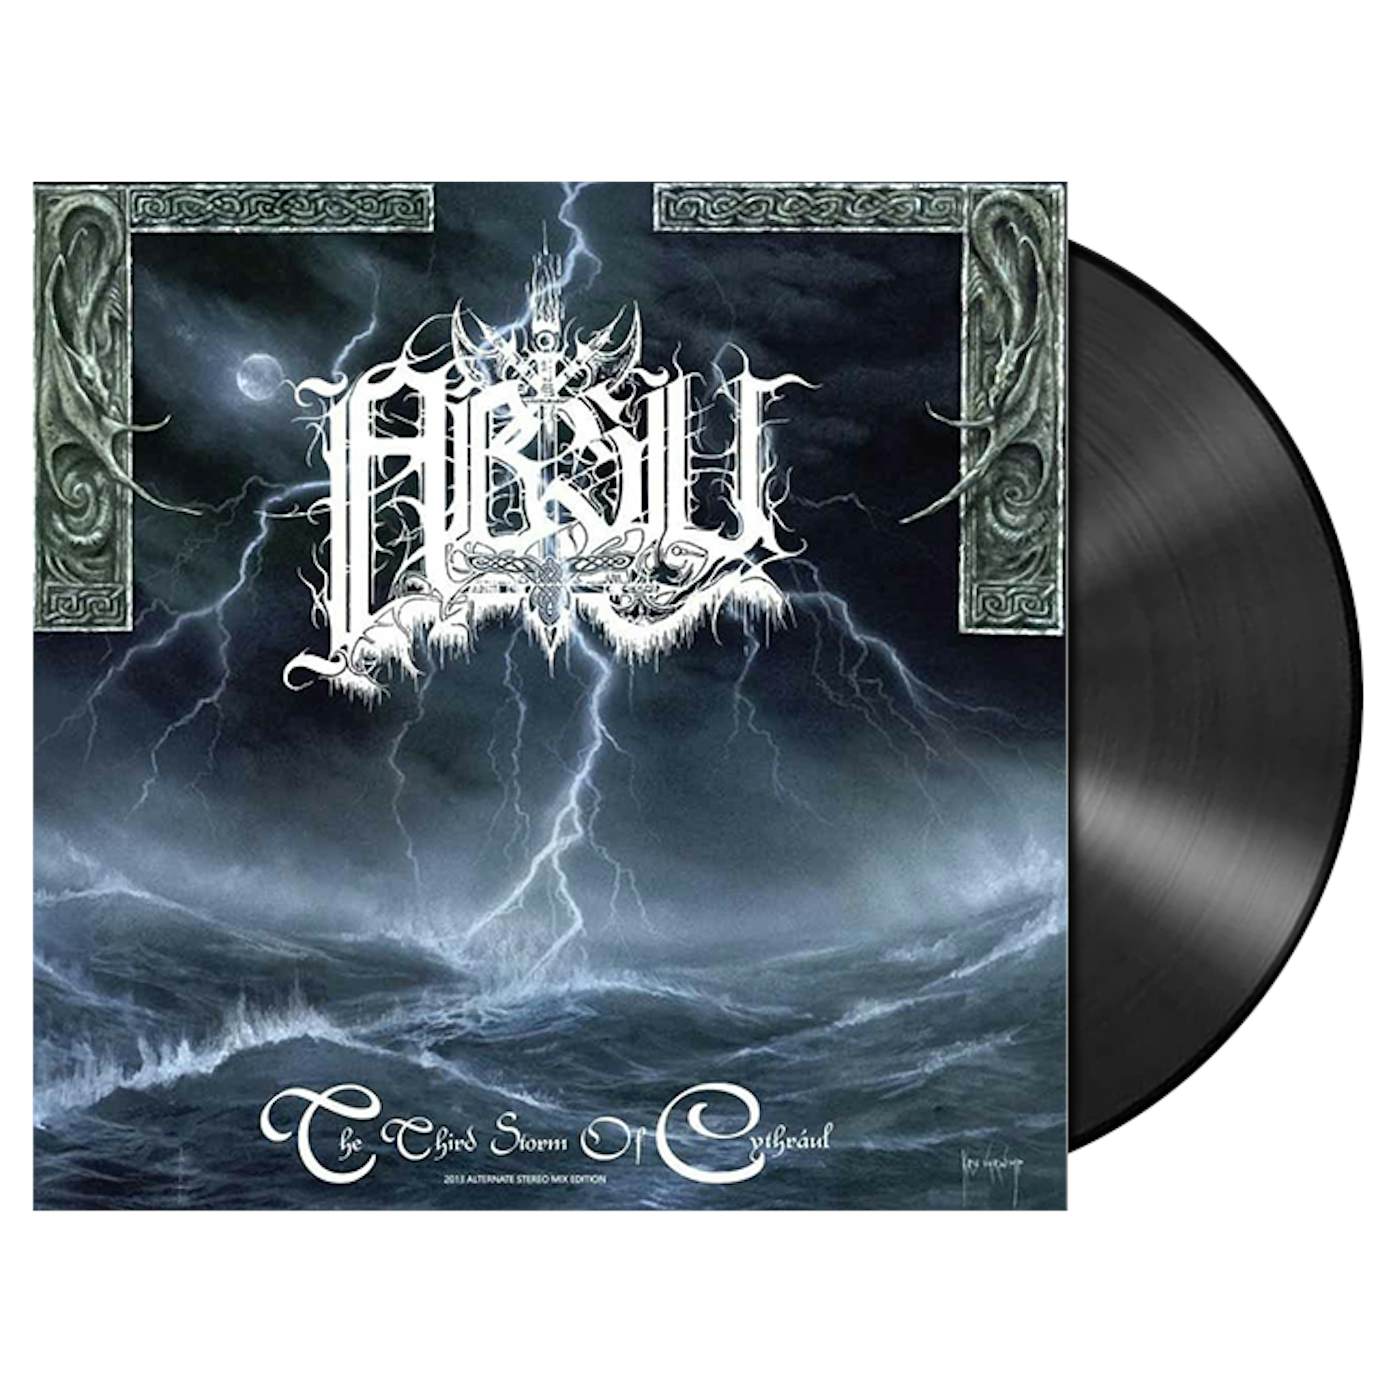 ABSU - 'The Third Storm Of Cythraul' LP (Black) (Vinyl)